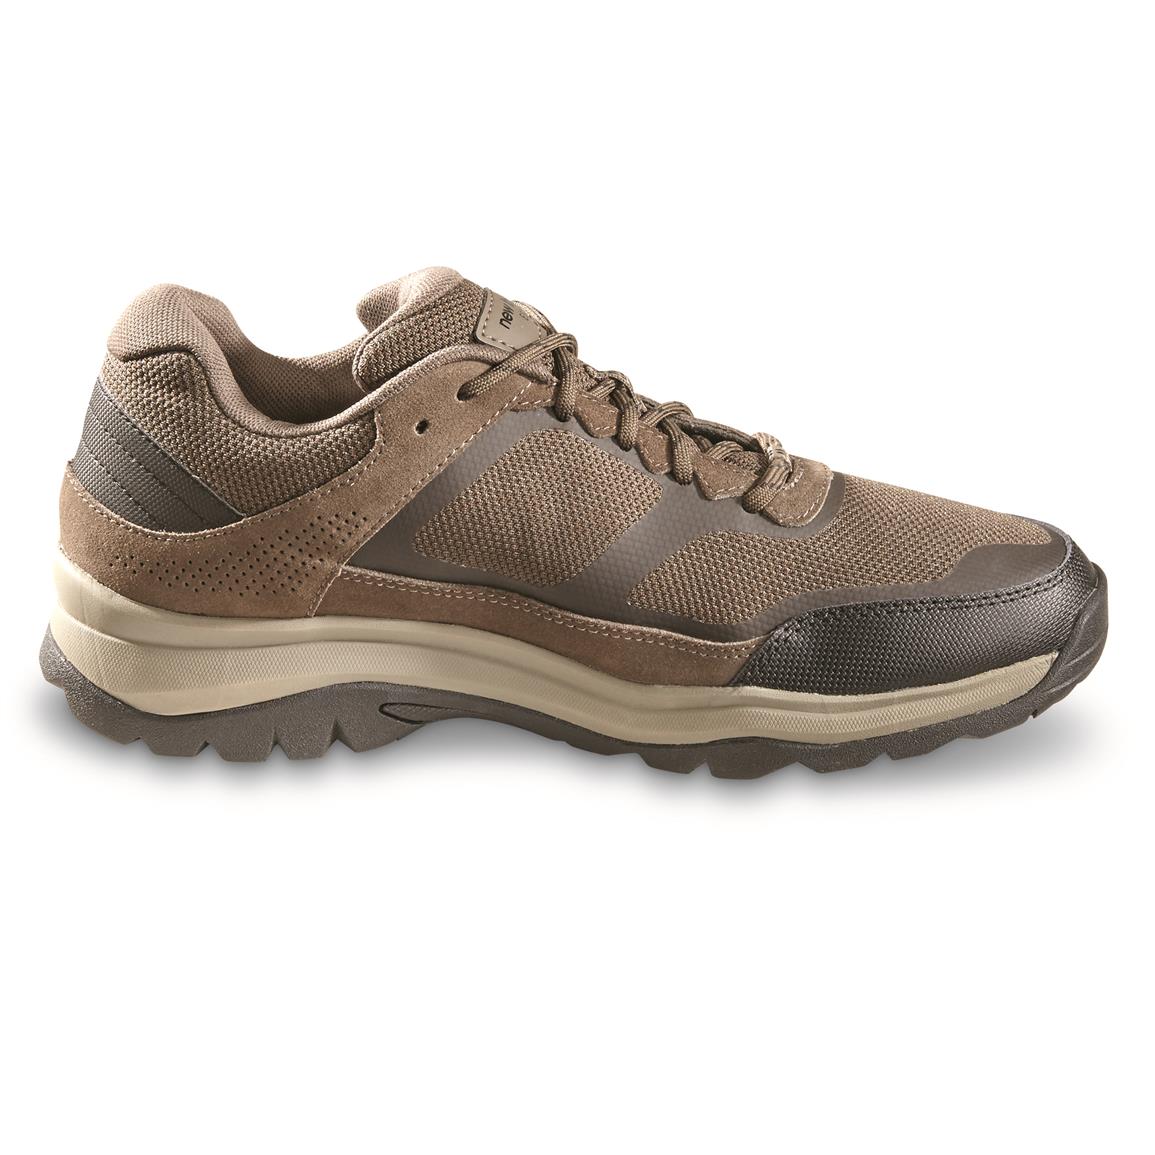 New Balance Men's 669v1 Trail Walking Shoes - 680847, Running Shoes ...